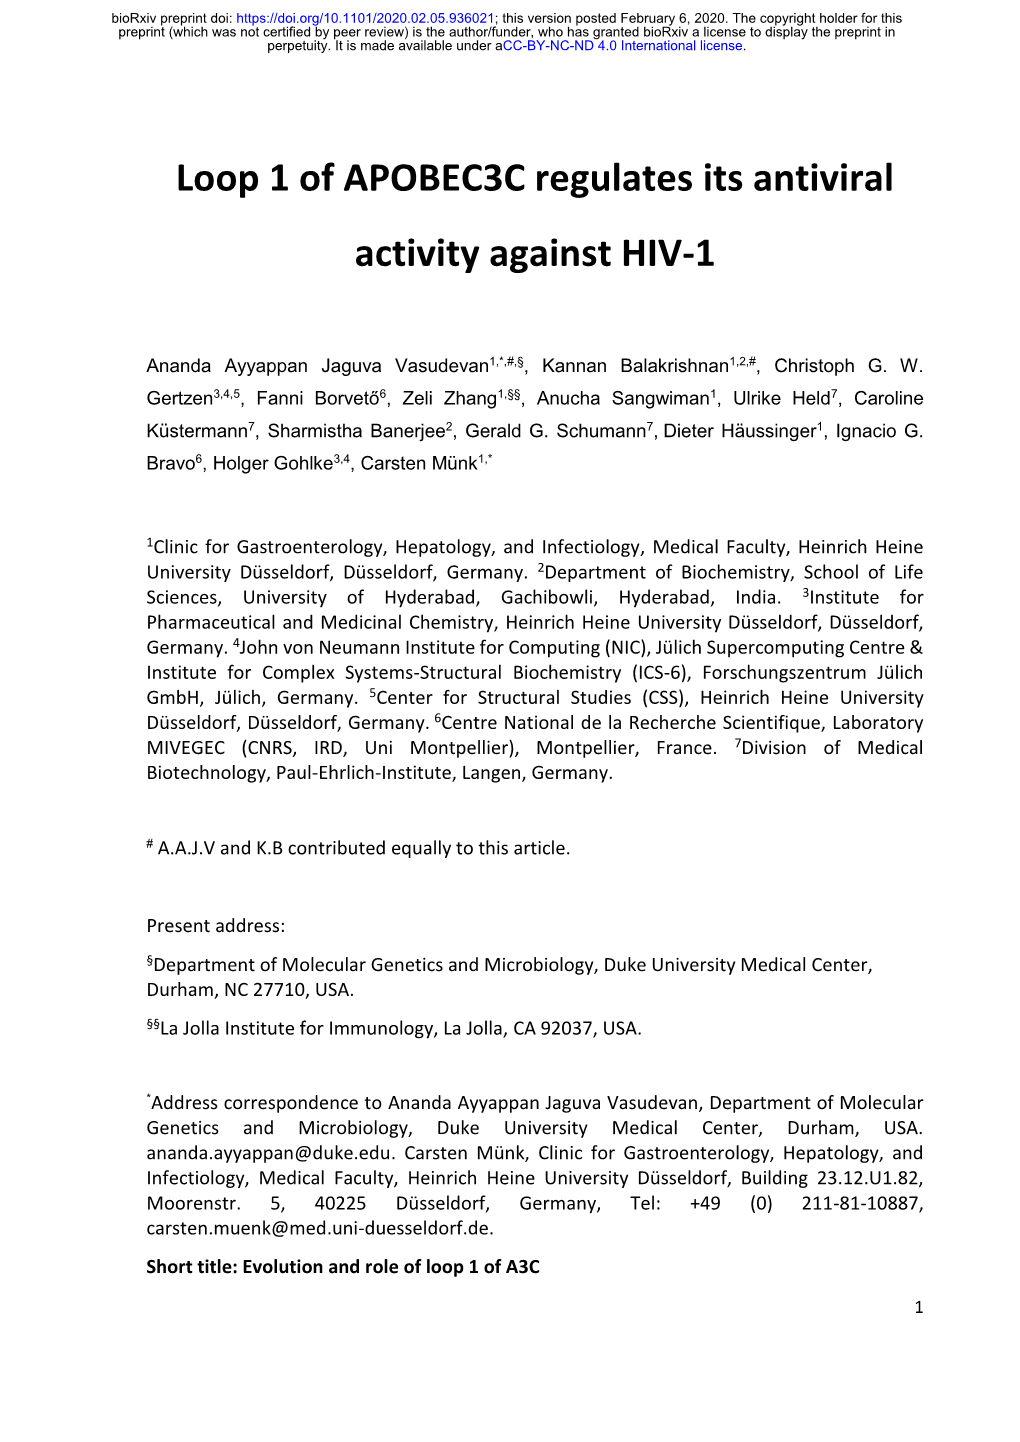 Loop 1 of APOBEC3C Regulates Its Antiviral Activity Against HIV-1